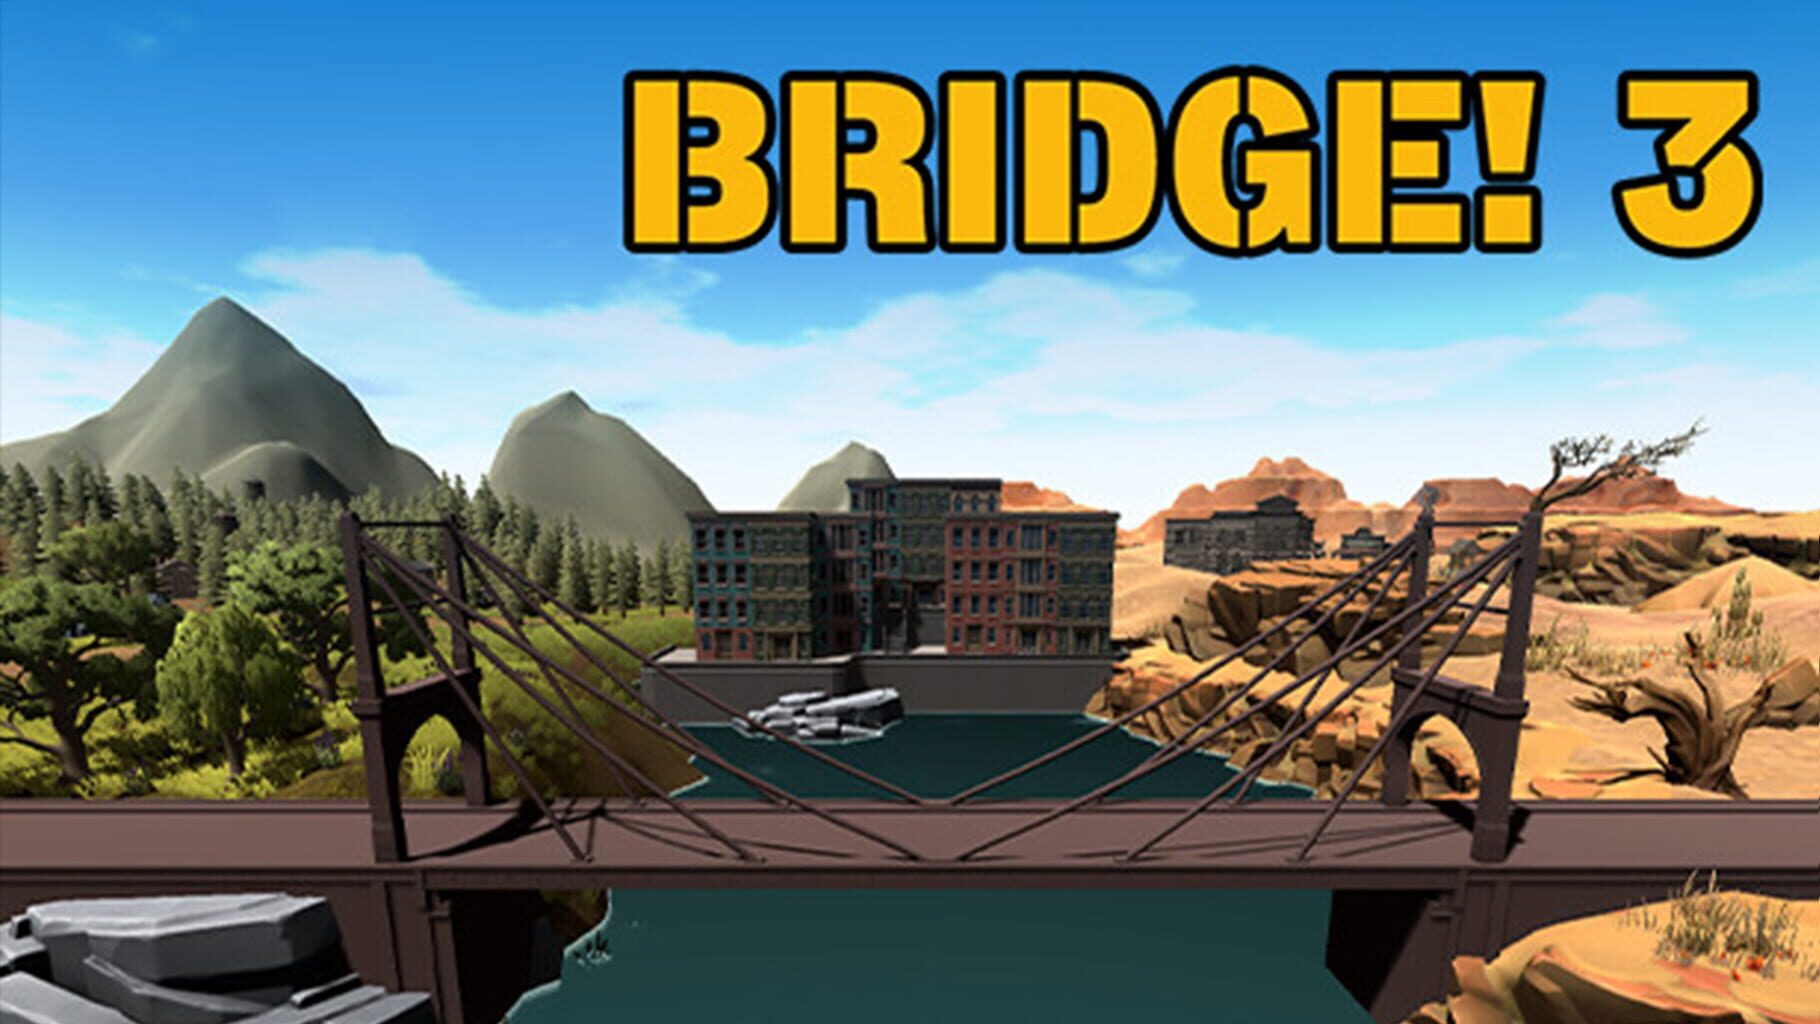 Bridge! 3 artwork